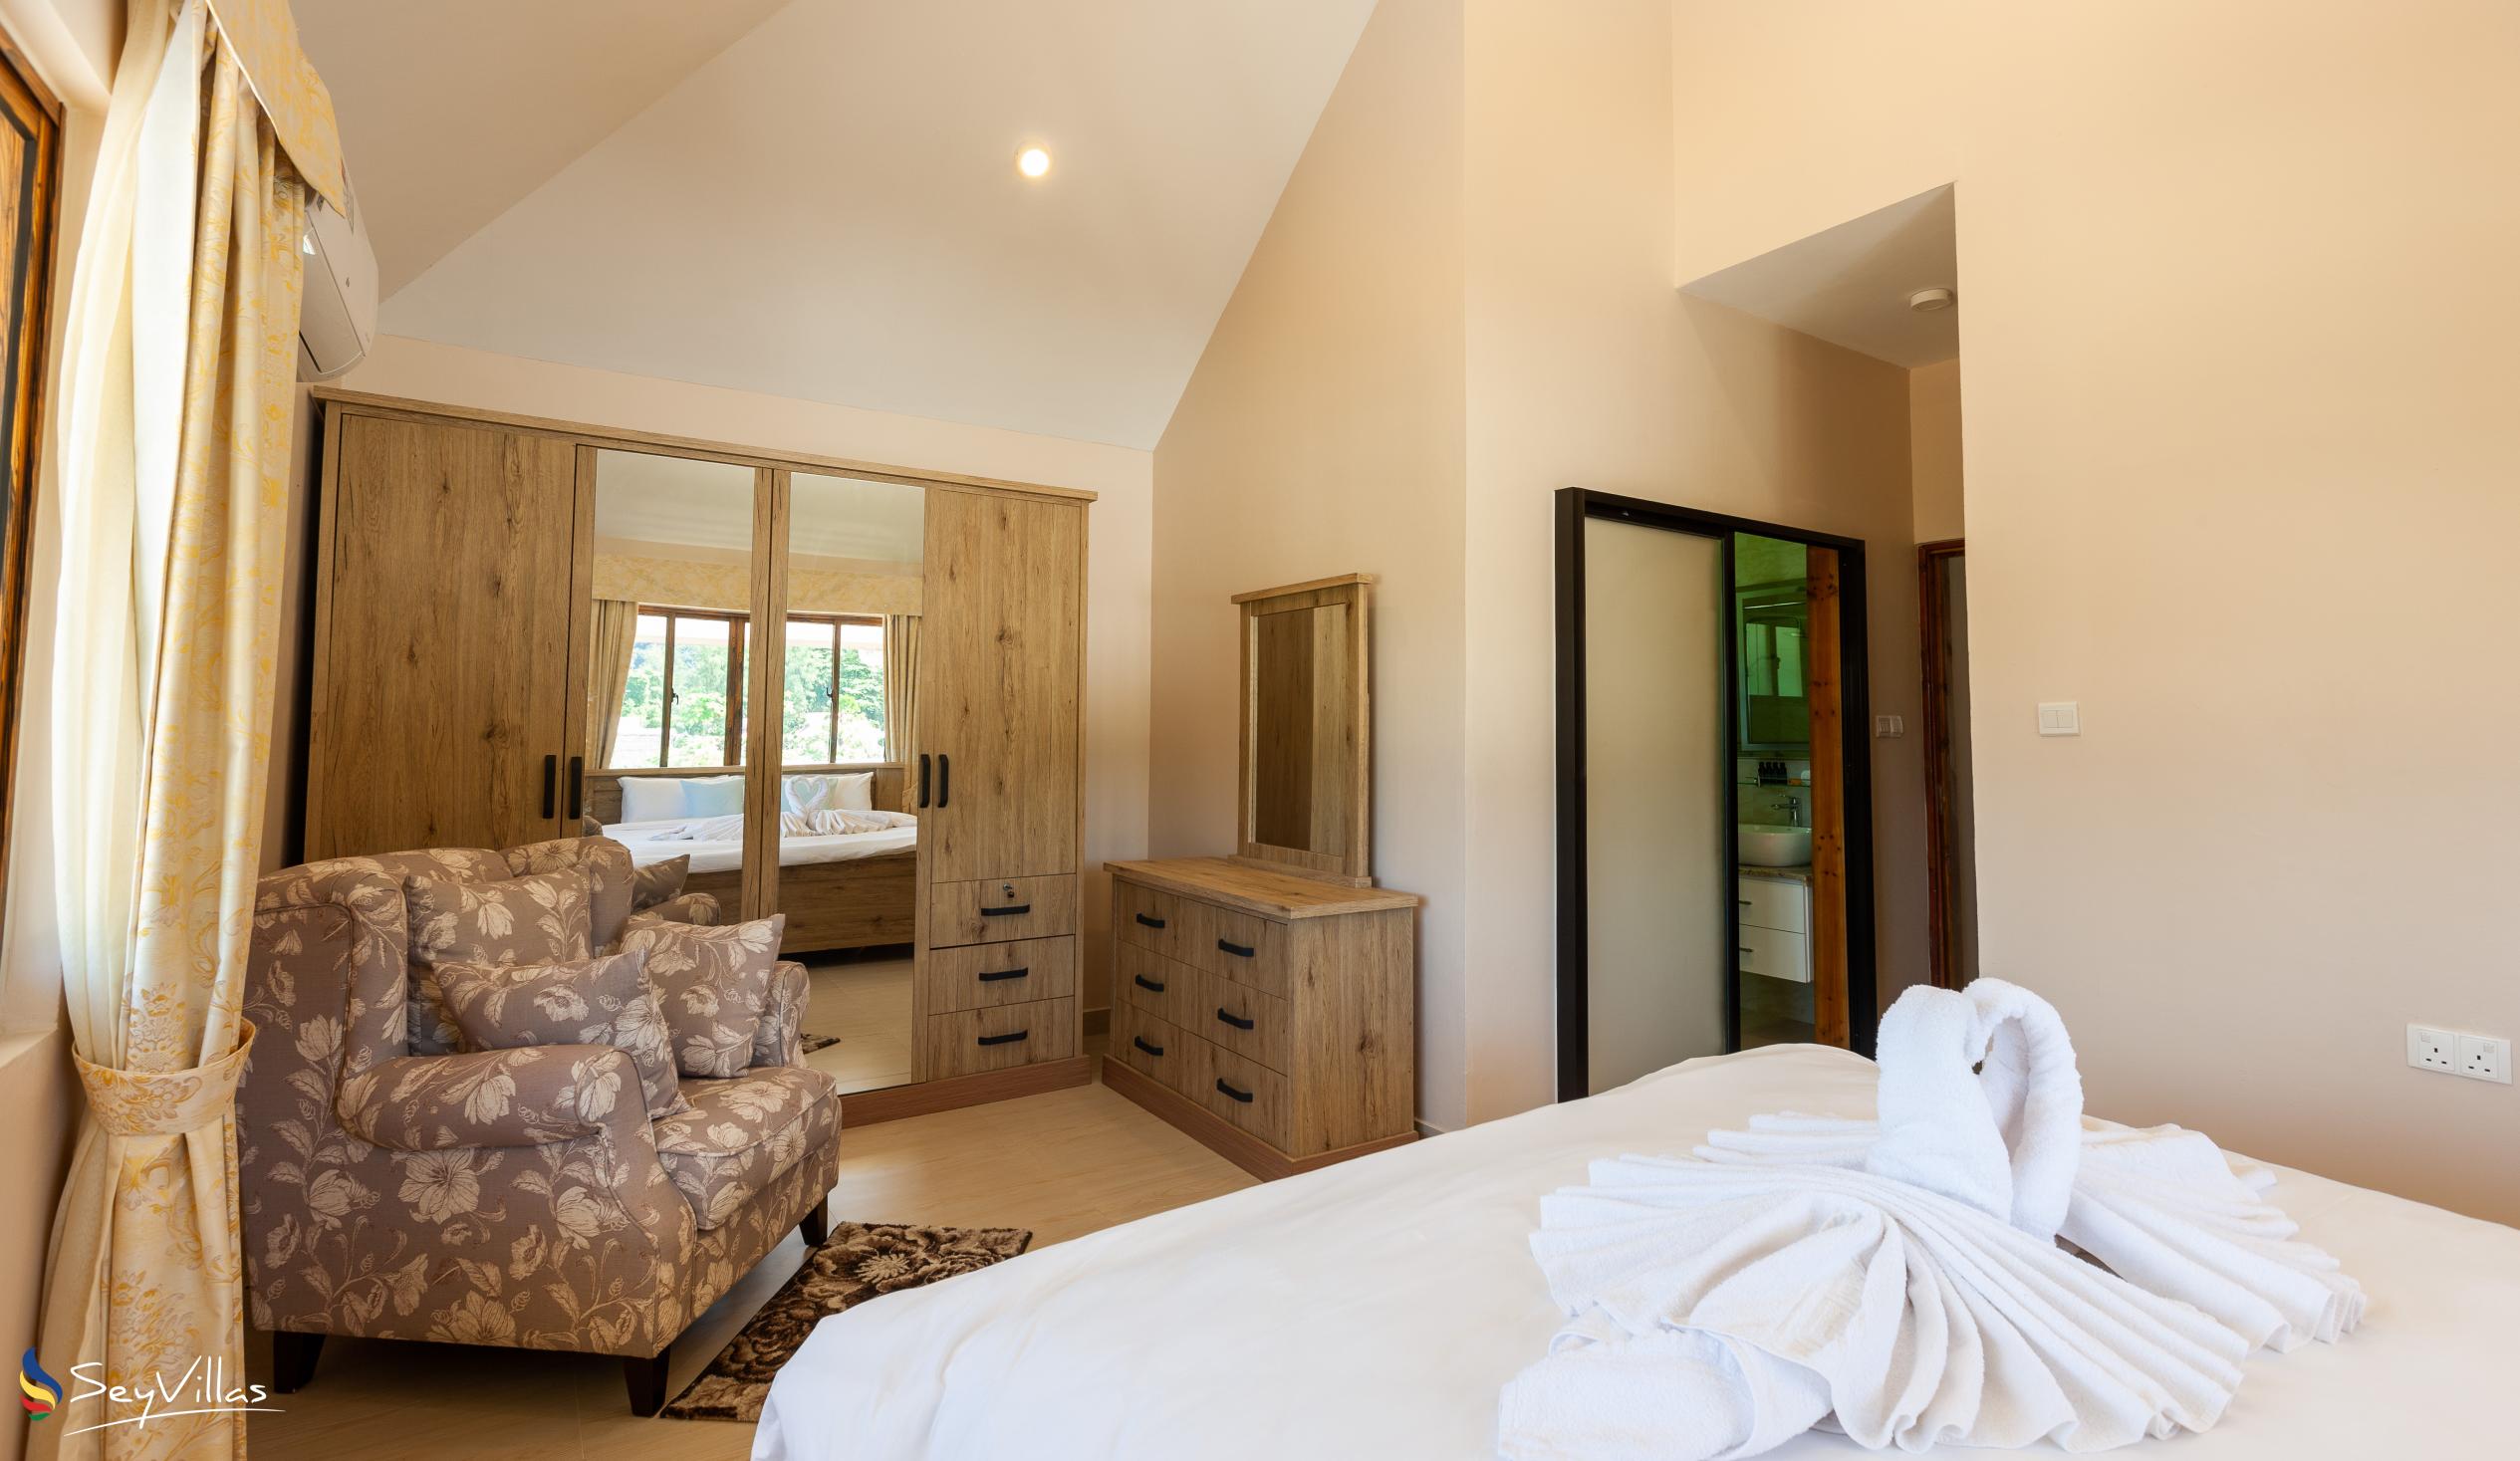 Photo 53: Stone Self Catering Apartments - 2-Bedroom Apartment - Praslin (Seychelles)